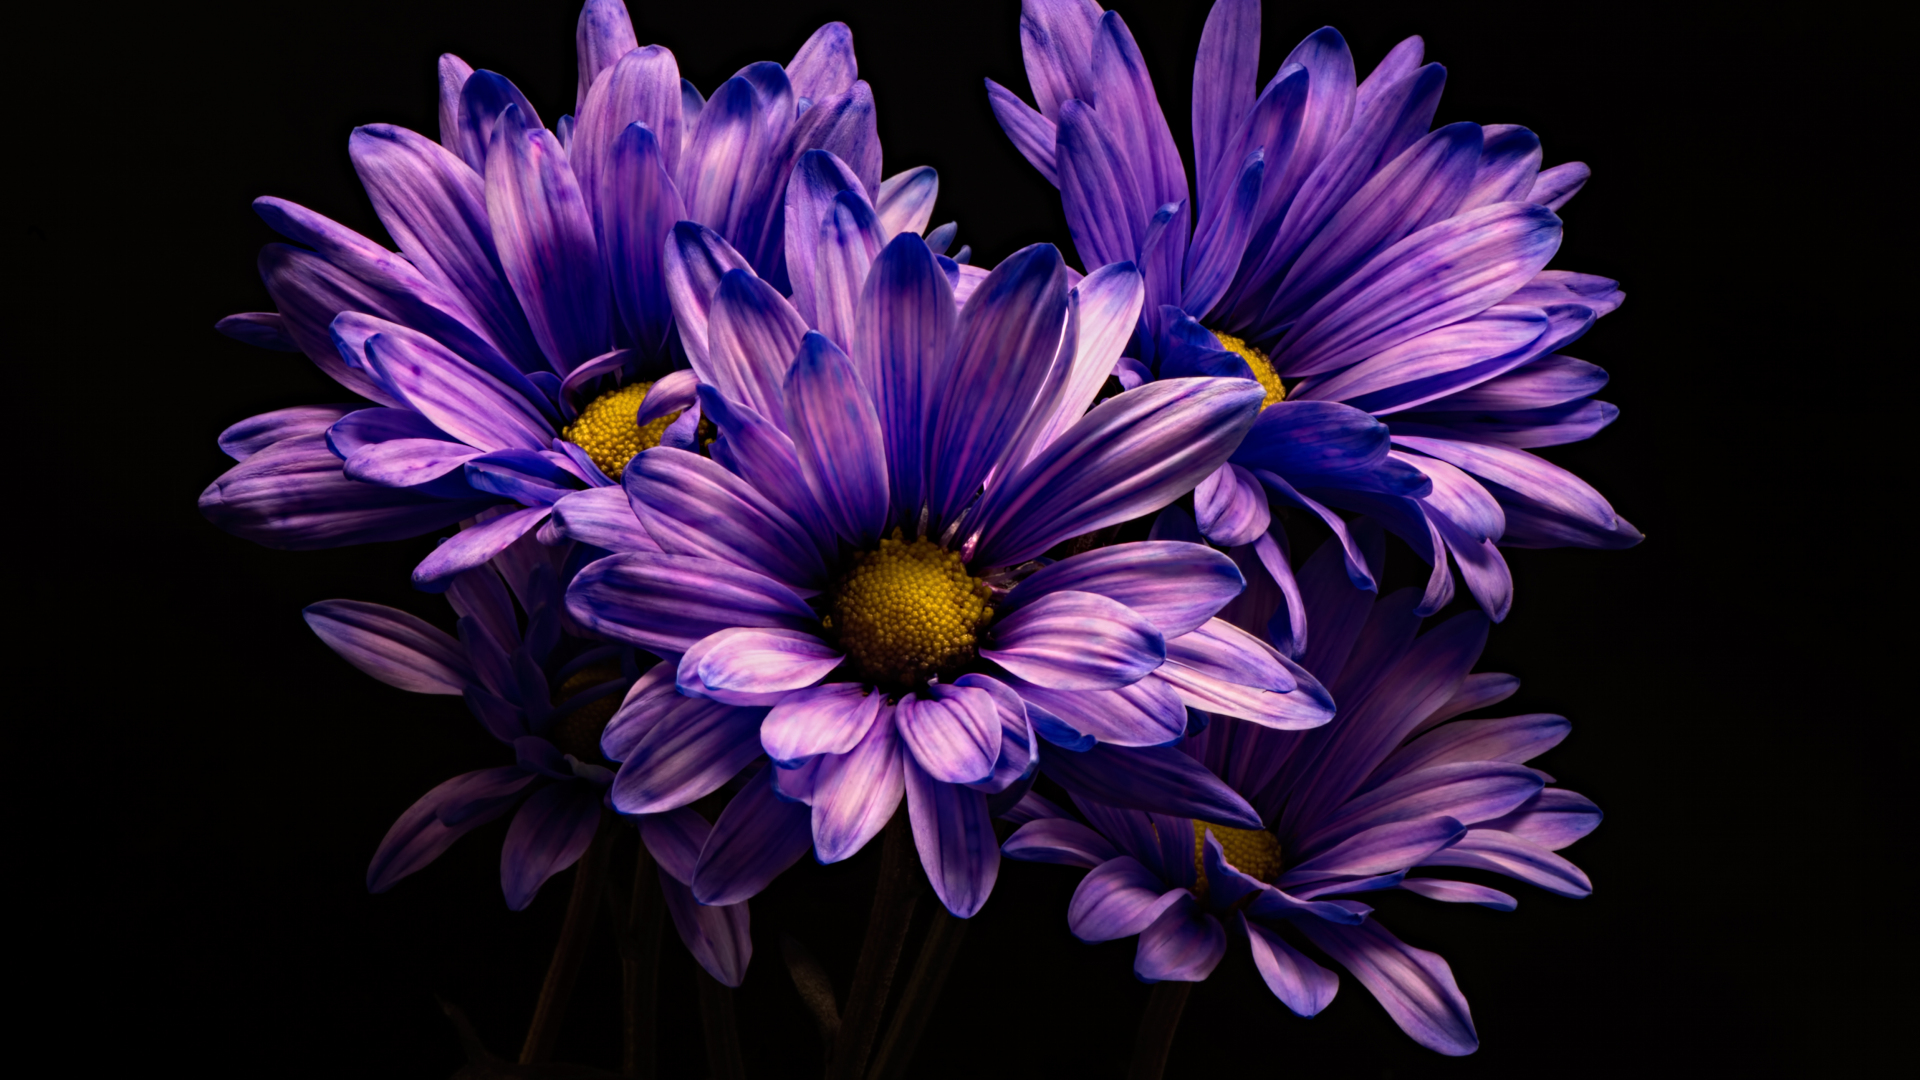 Download 1920x1080 wallpaper violet  flower chrysanthemum 